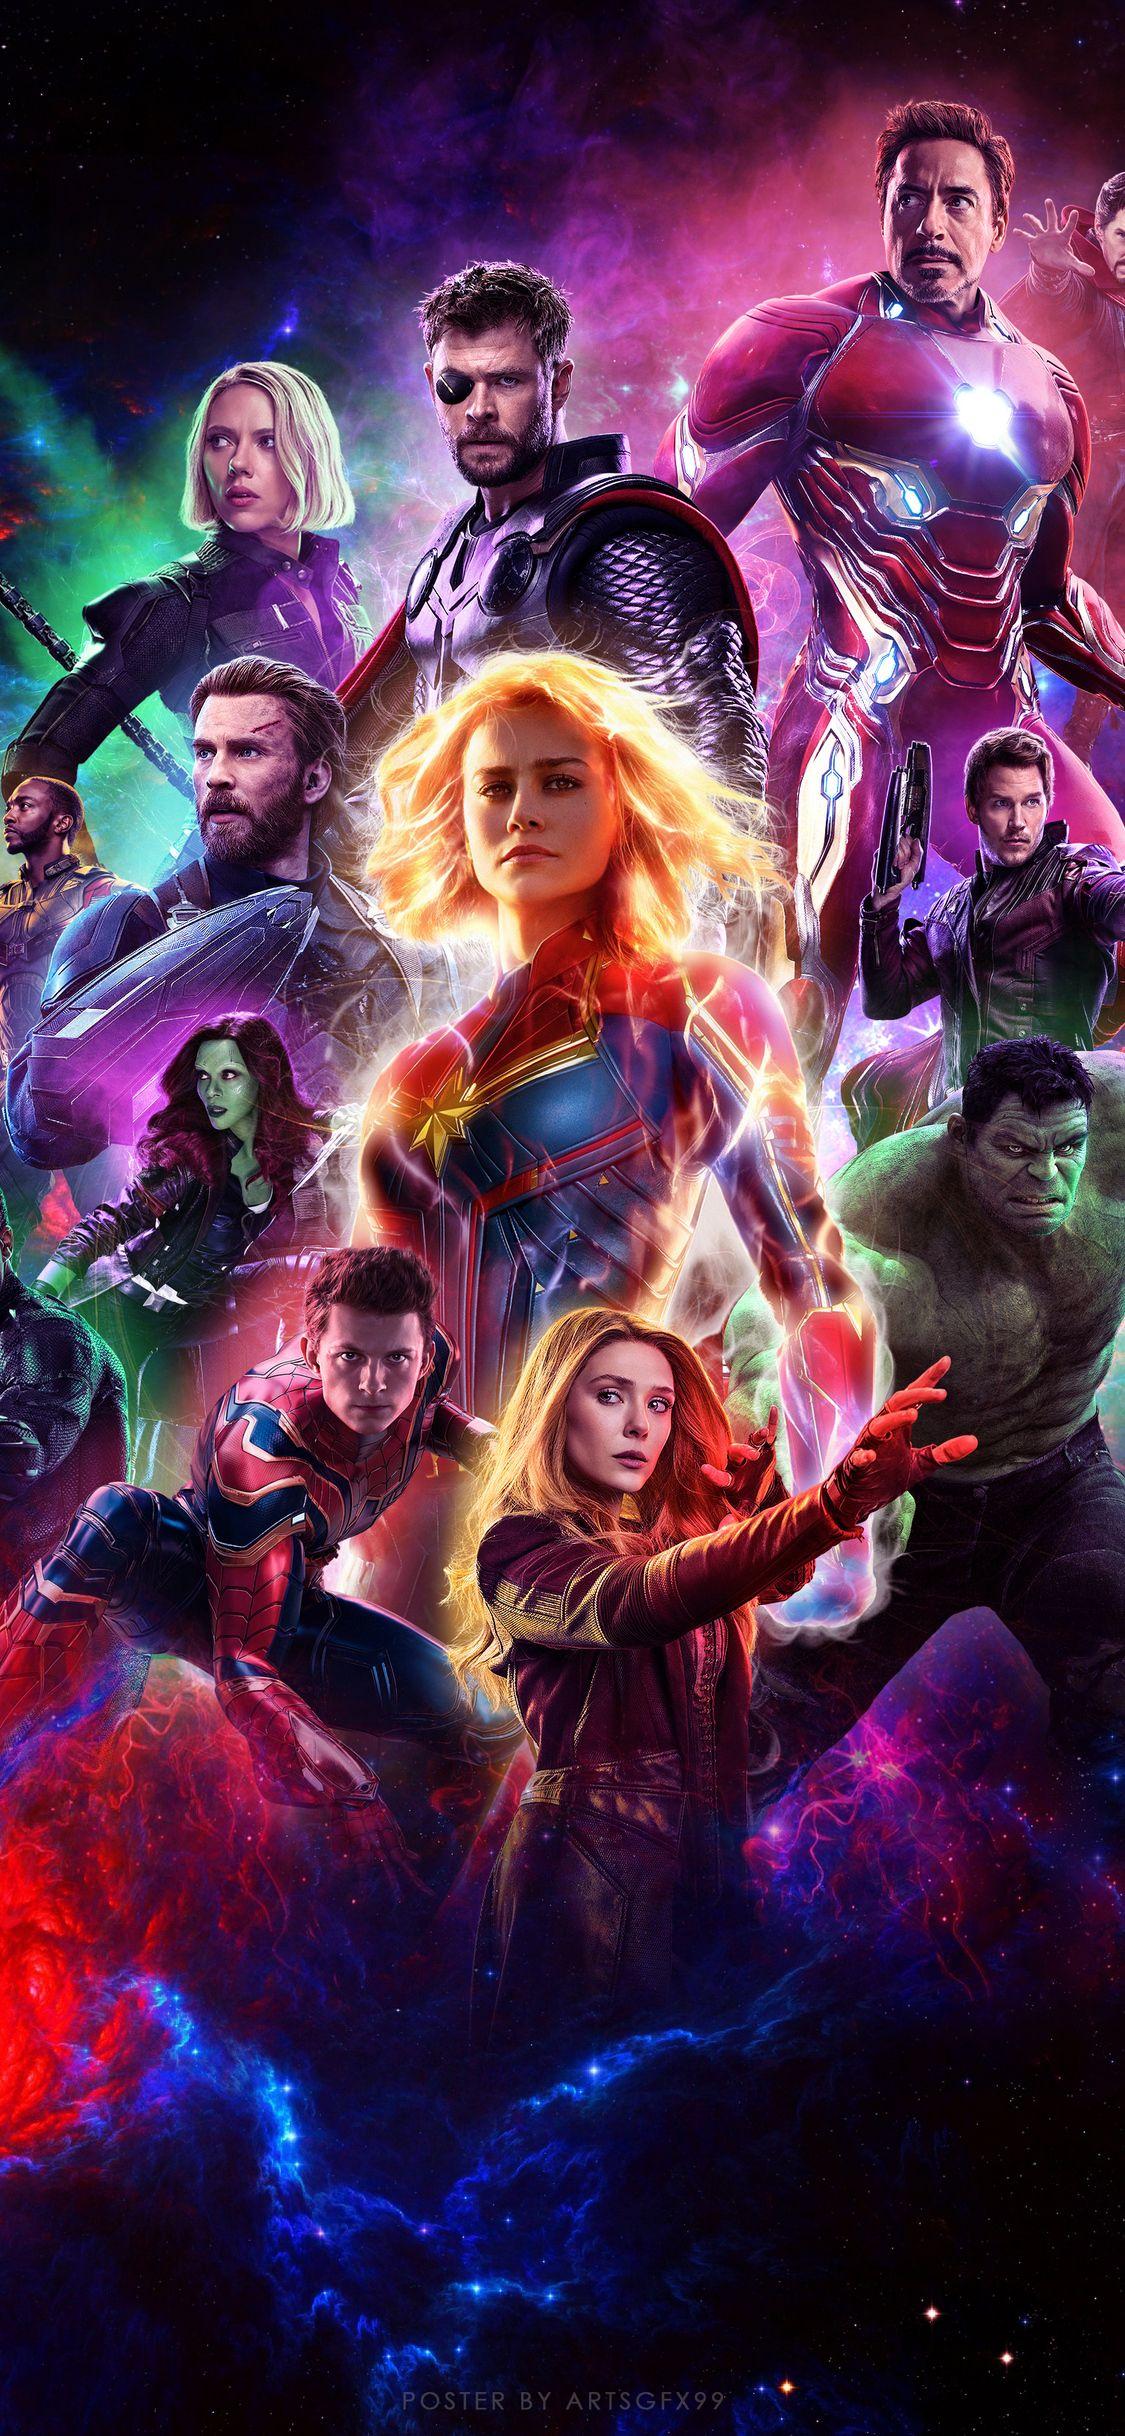 Avengers Endgame 2019 iPhone XS, iPhone iPhone X HD 4k Wallpaper, Image, Background, Photo a. Marvel avengers, Marvel superheroes, Avengers movies